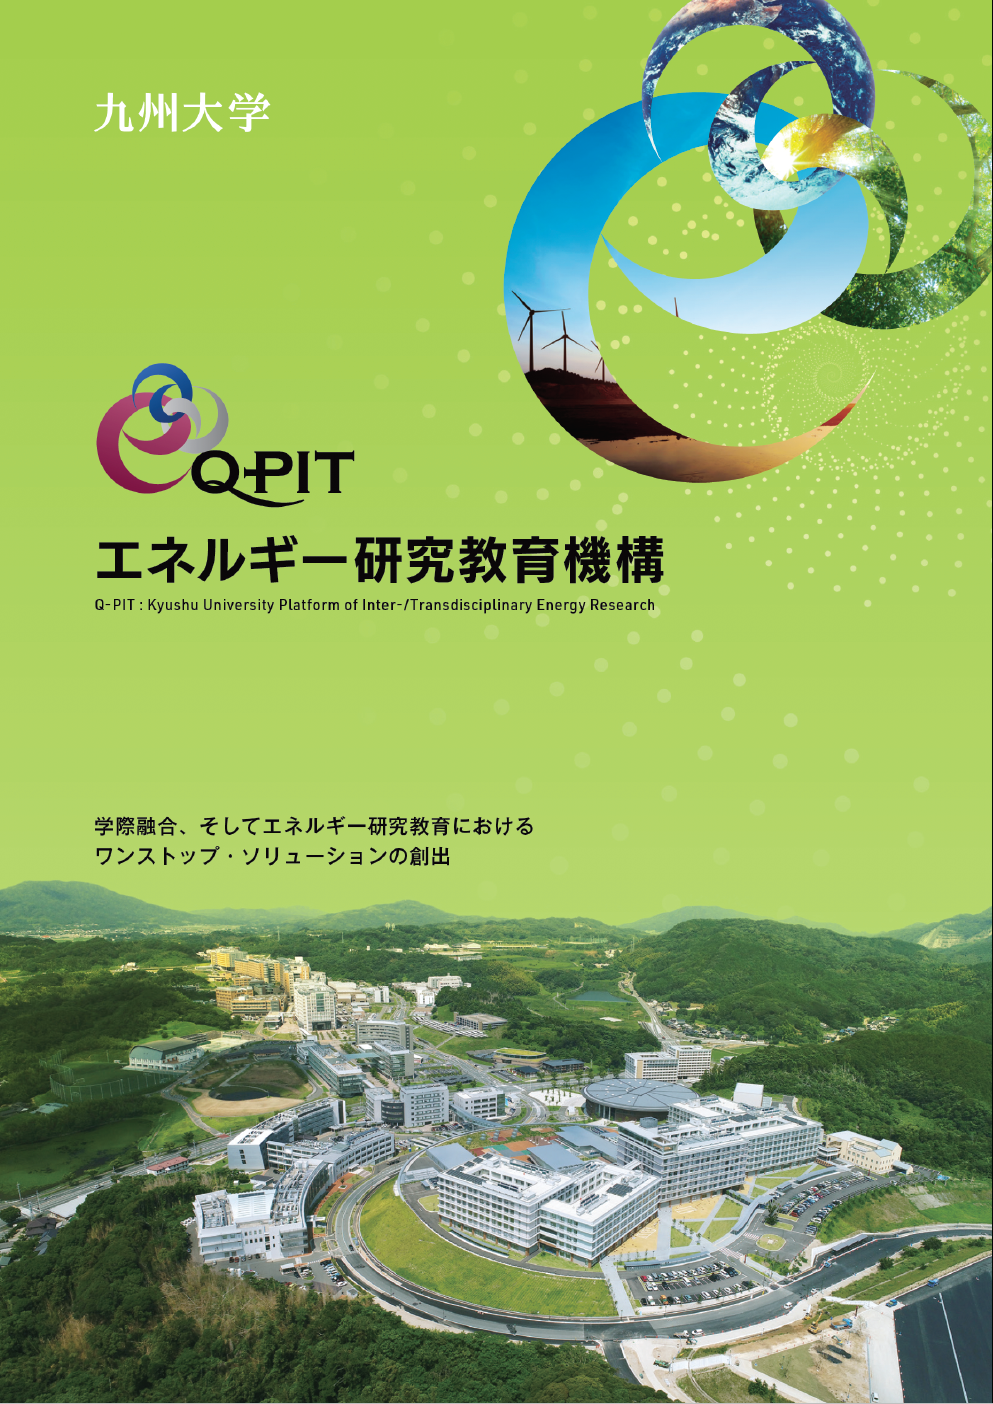 Q-PIT pamphlet 2022 (Japanese)